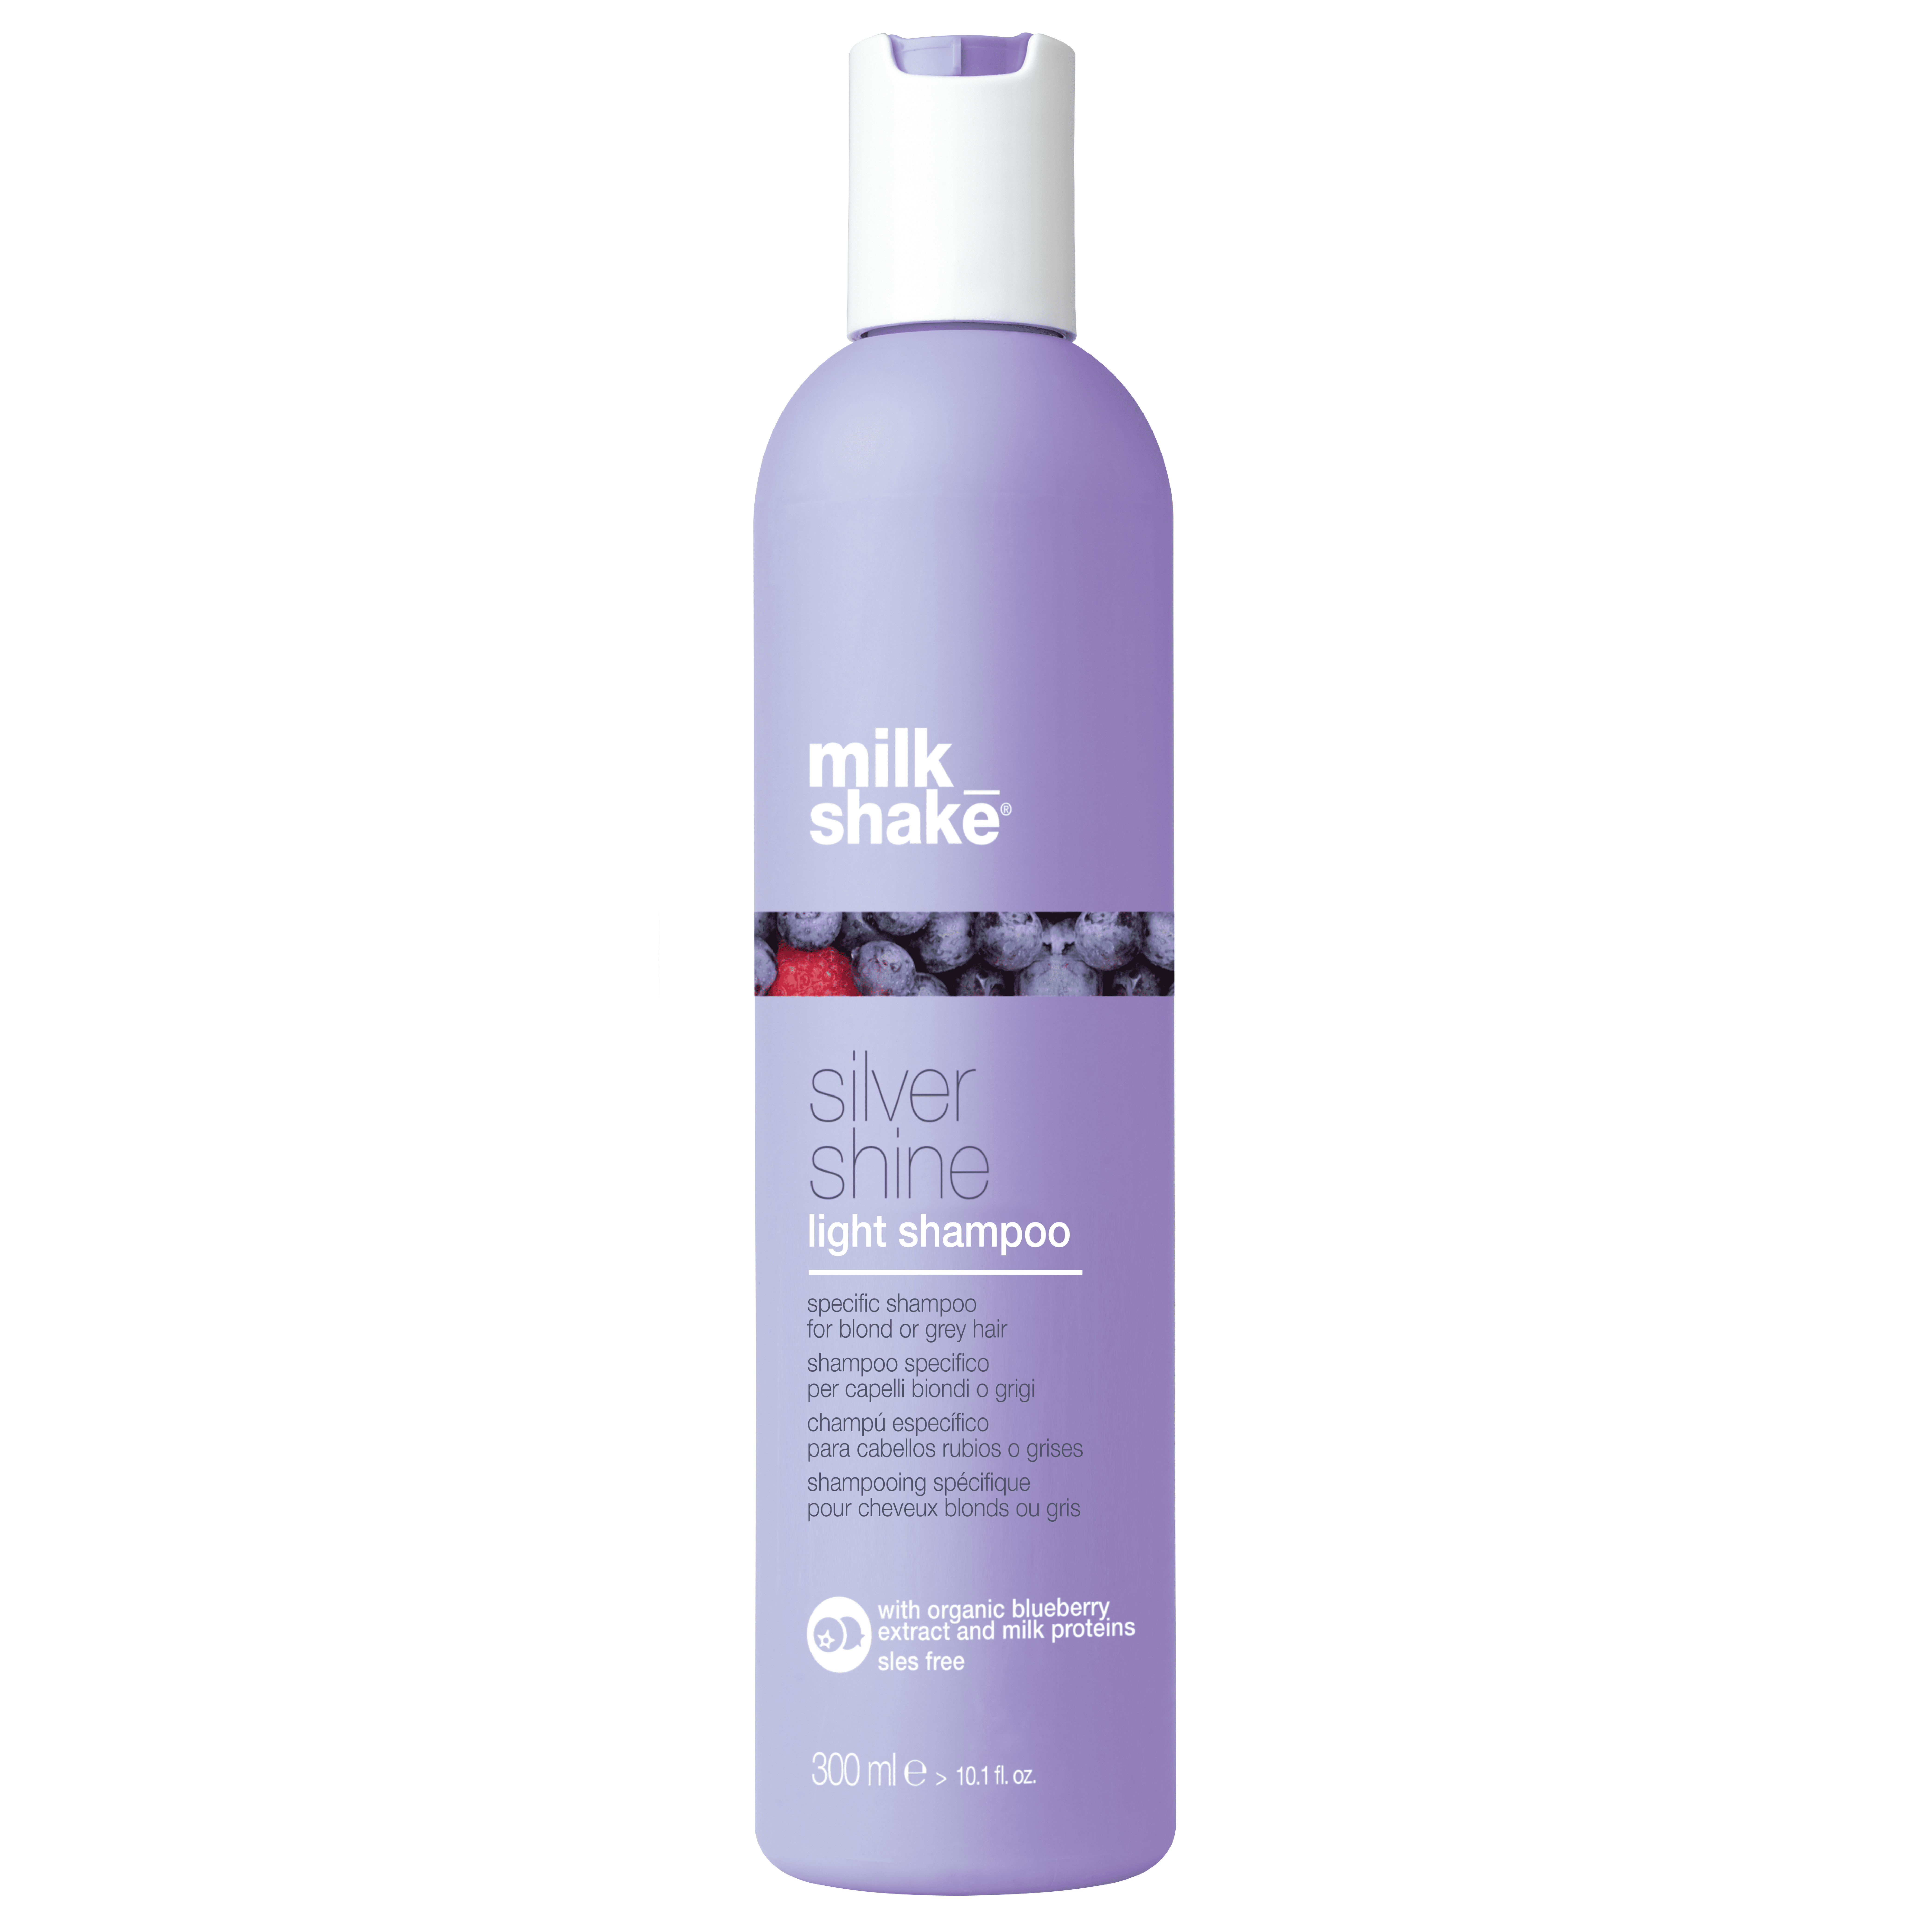 kaste støv i øjnene opnåelige undskyld Milkshake Silver Shine Light Shampoo - 10.1 oz - Walmart.com